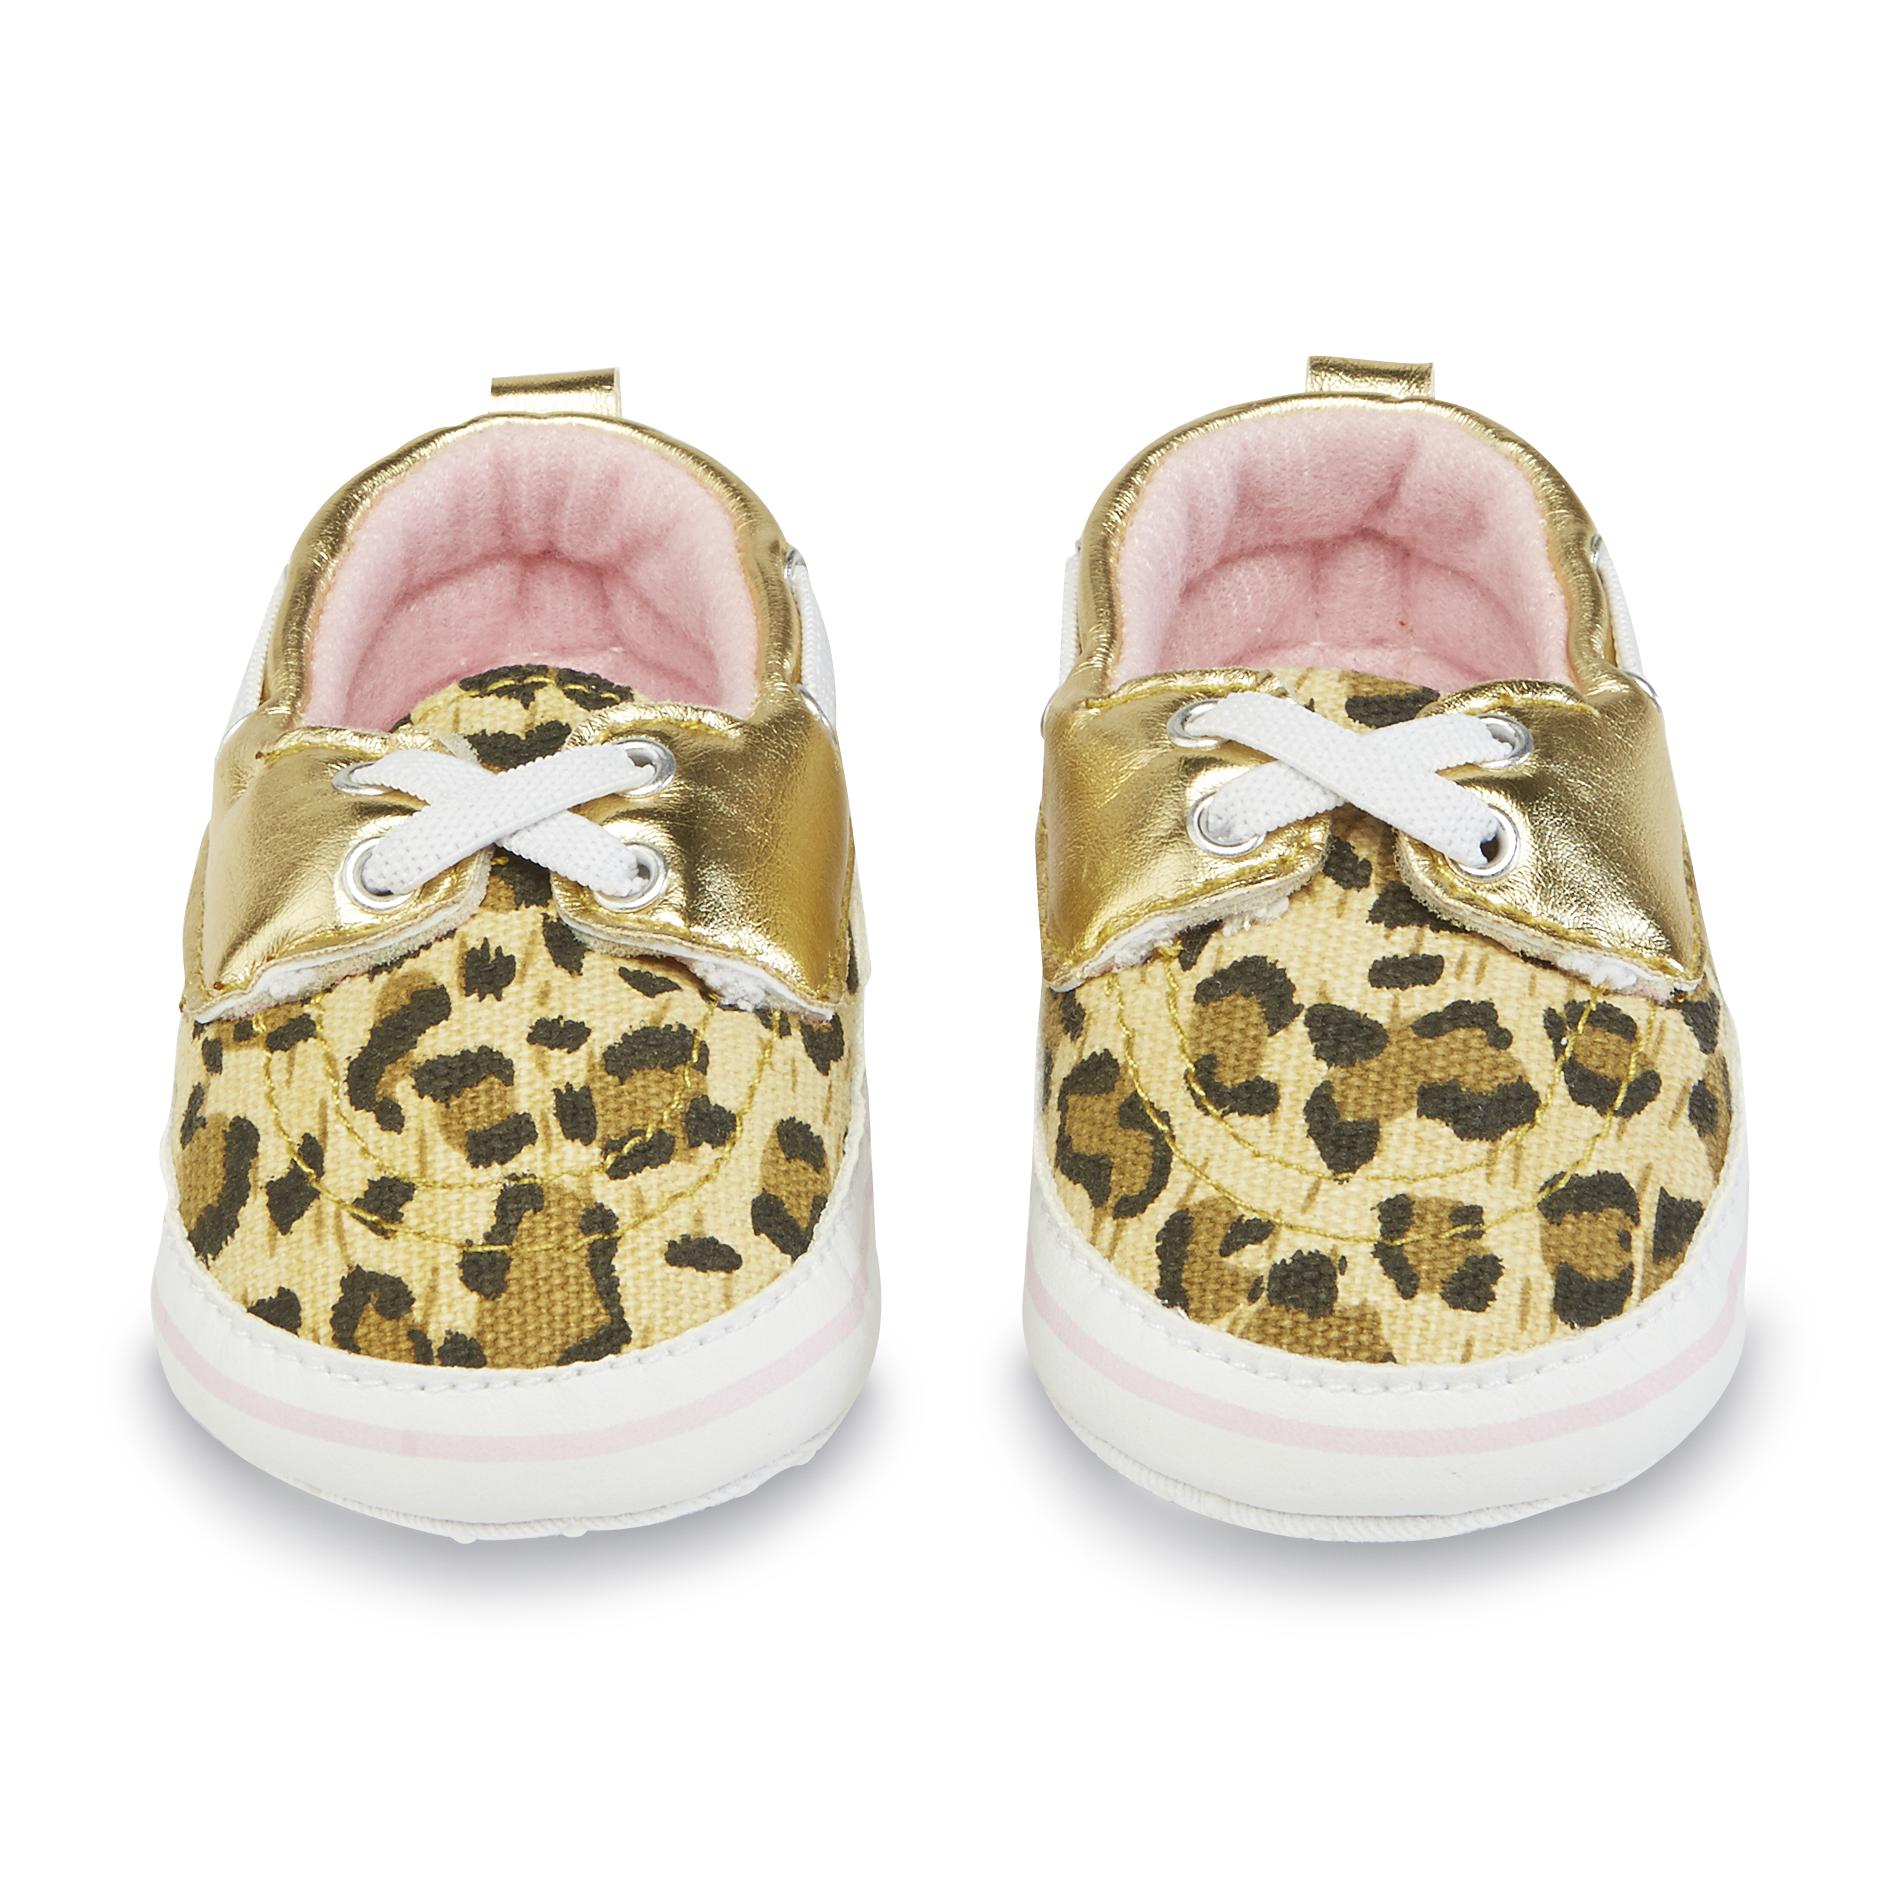 Newborn & Infant Girl's Leopard Print Shoe - Clothing ...